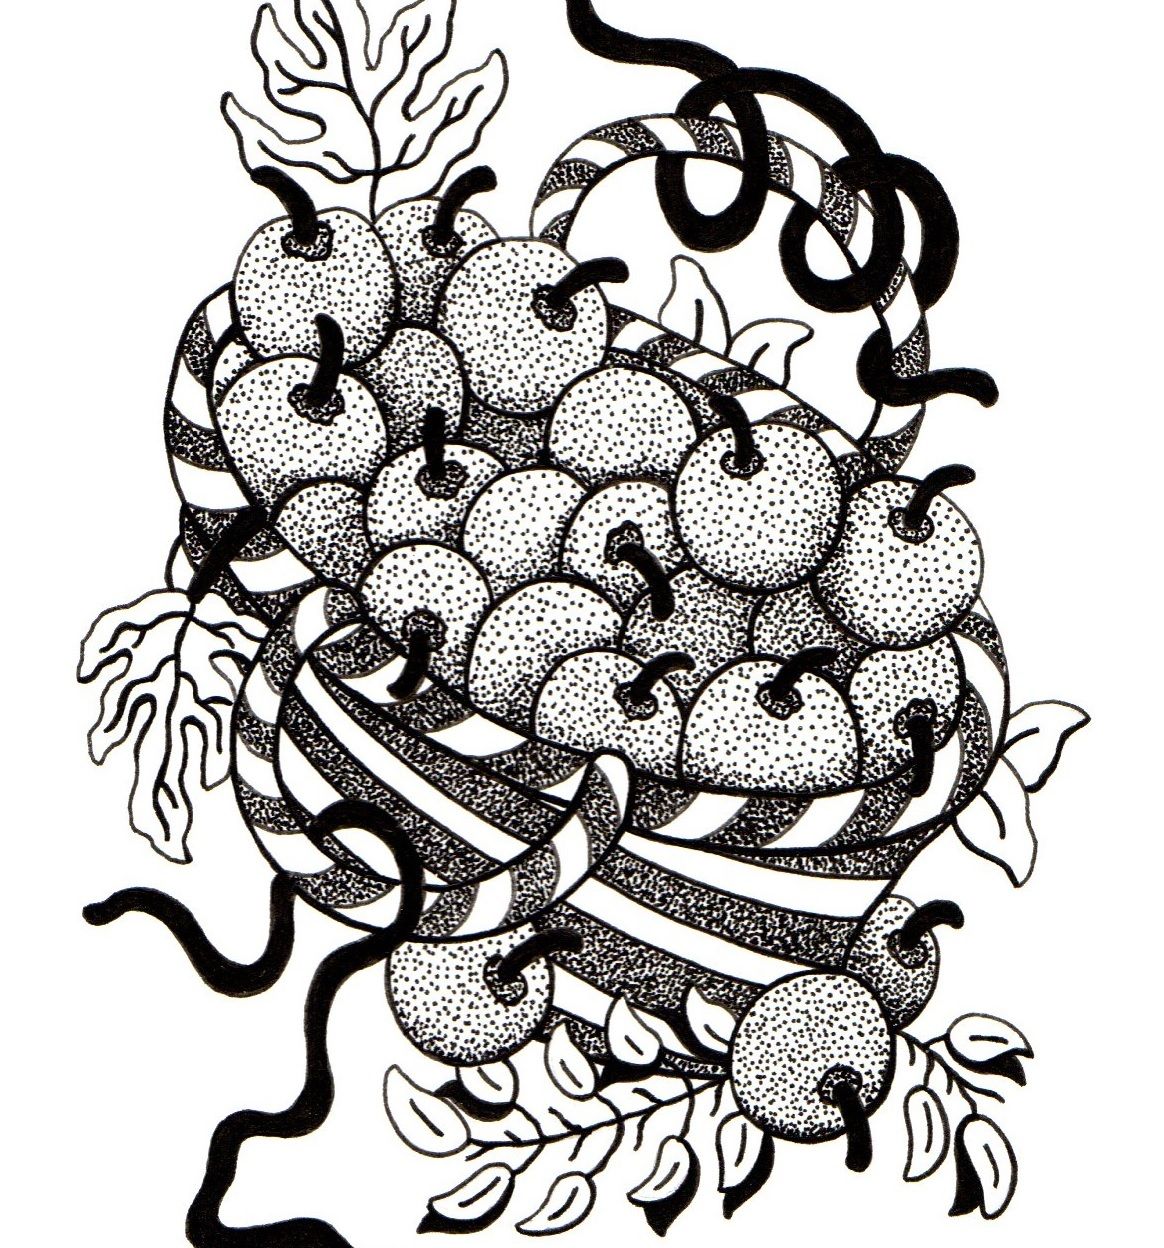 Basket Of Apples Drawing by Artist Sharon Godwin www.sgodwinstudio.co.uk